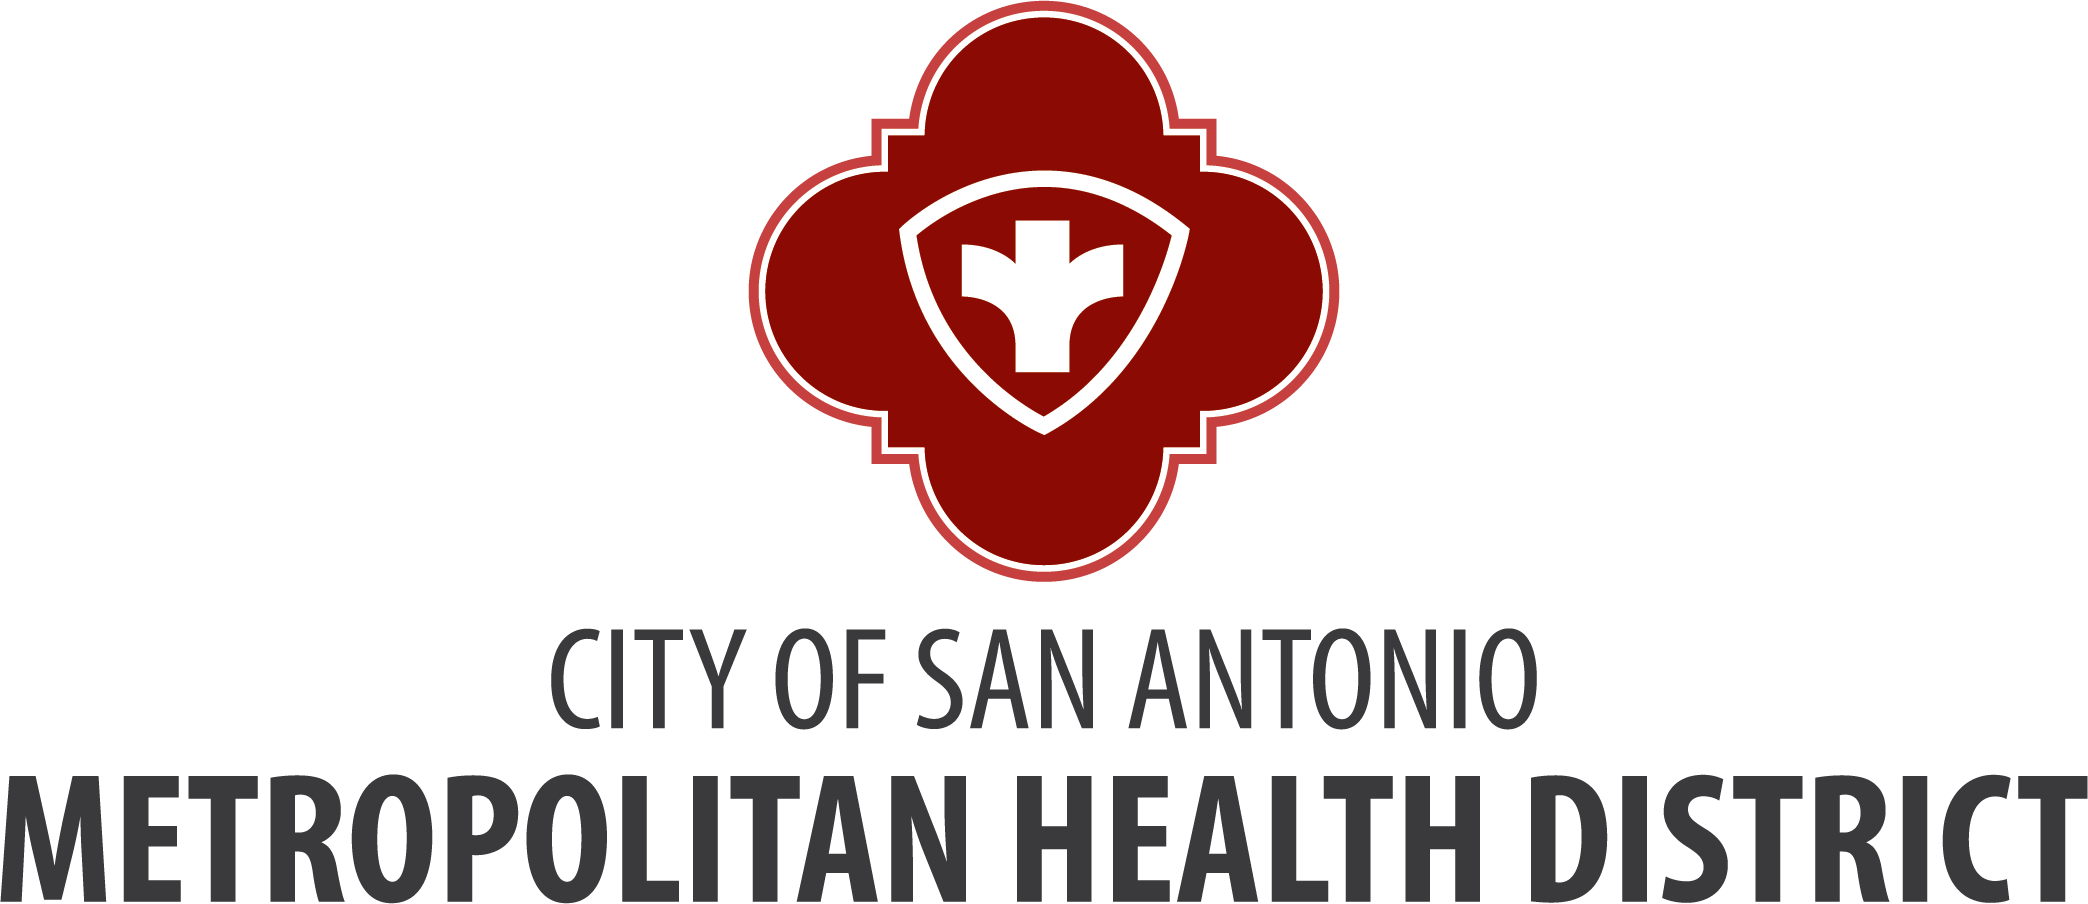 city of san antonio metropolitan health district logo